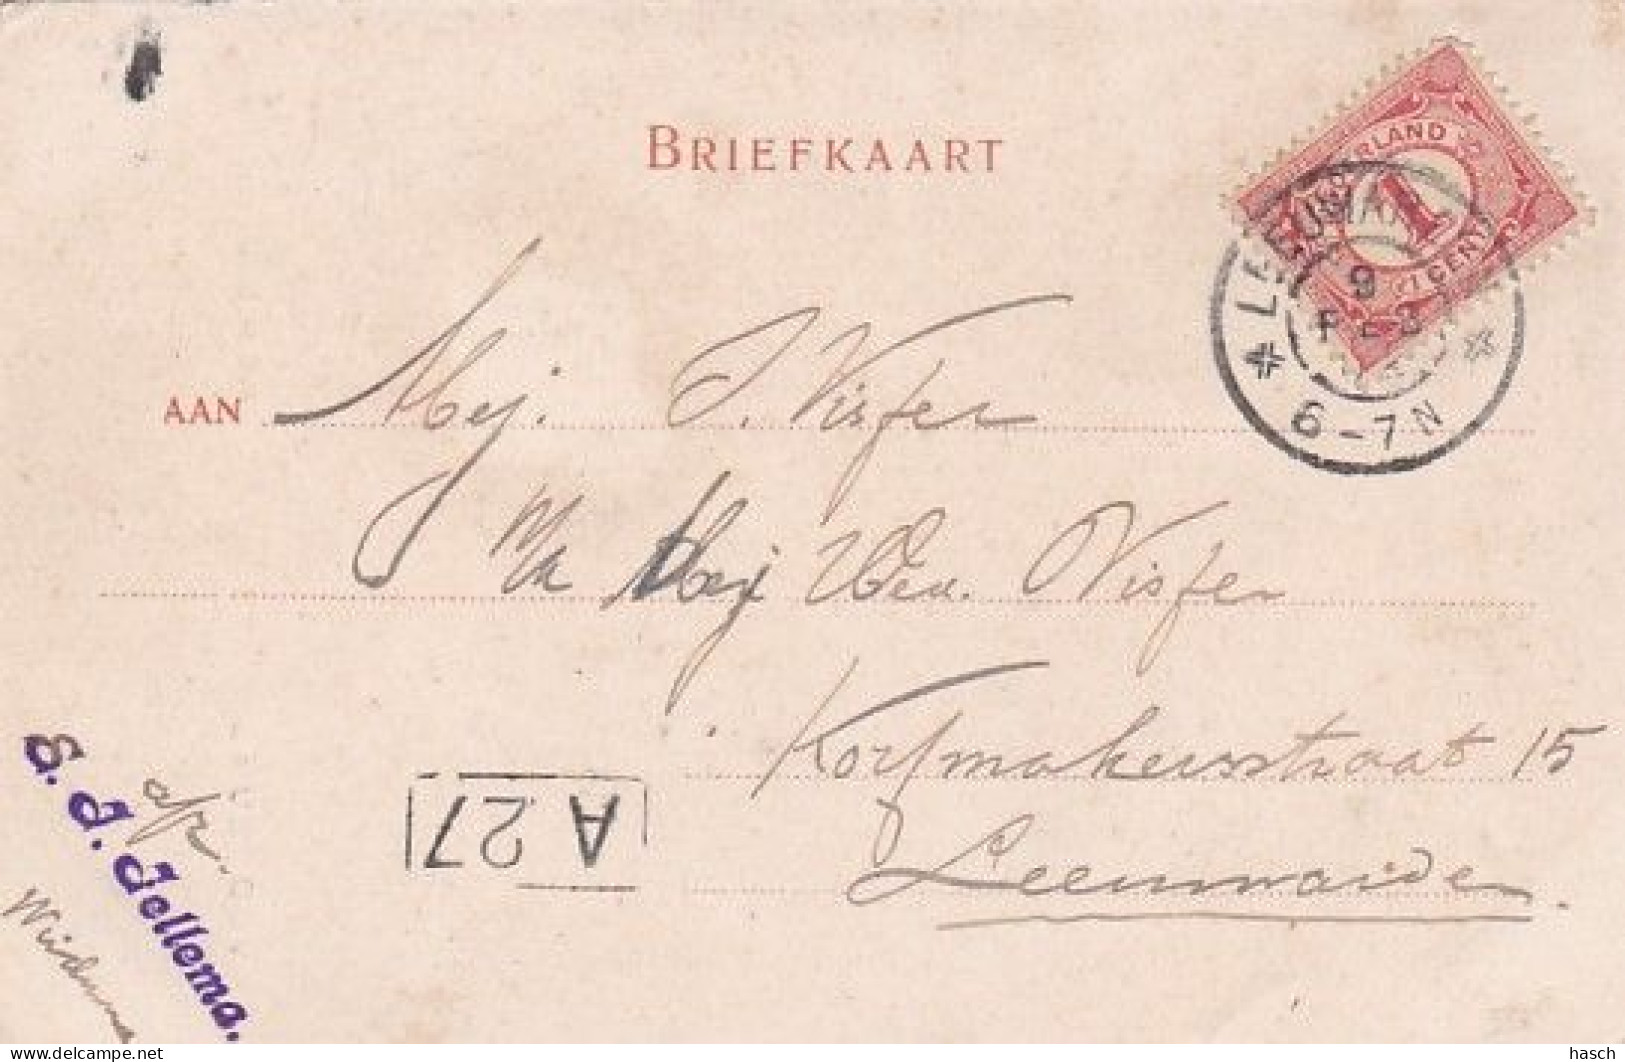 4842377Voorburg, Aan De Broeksloot. (poststempel 1902) - Voorburg